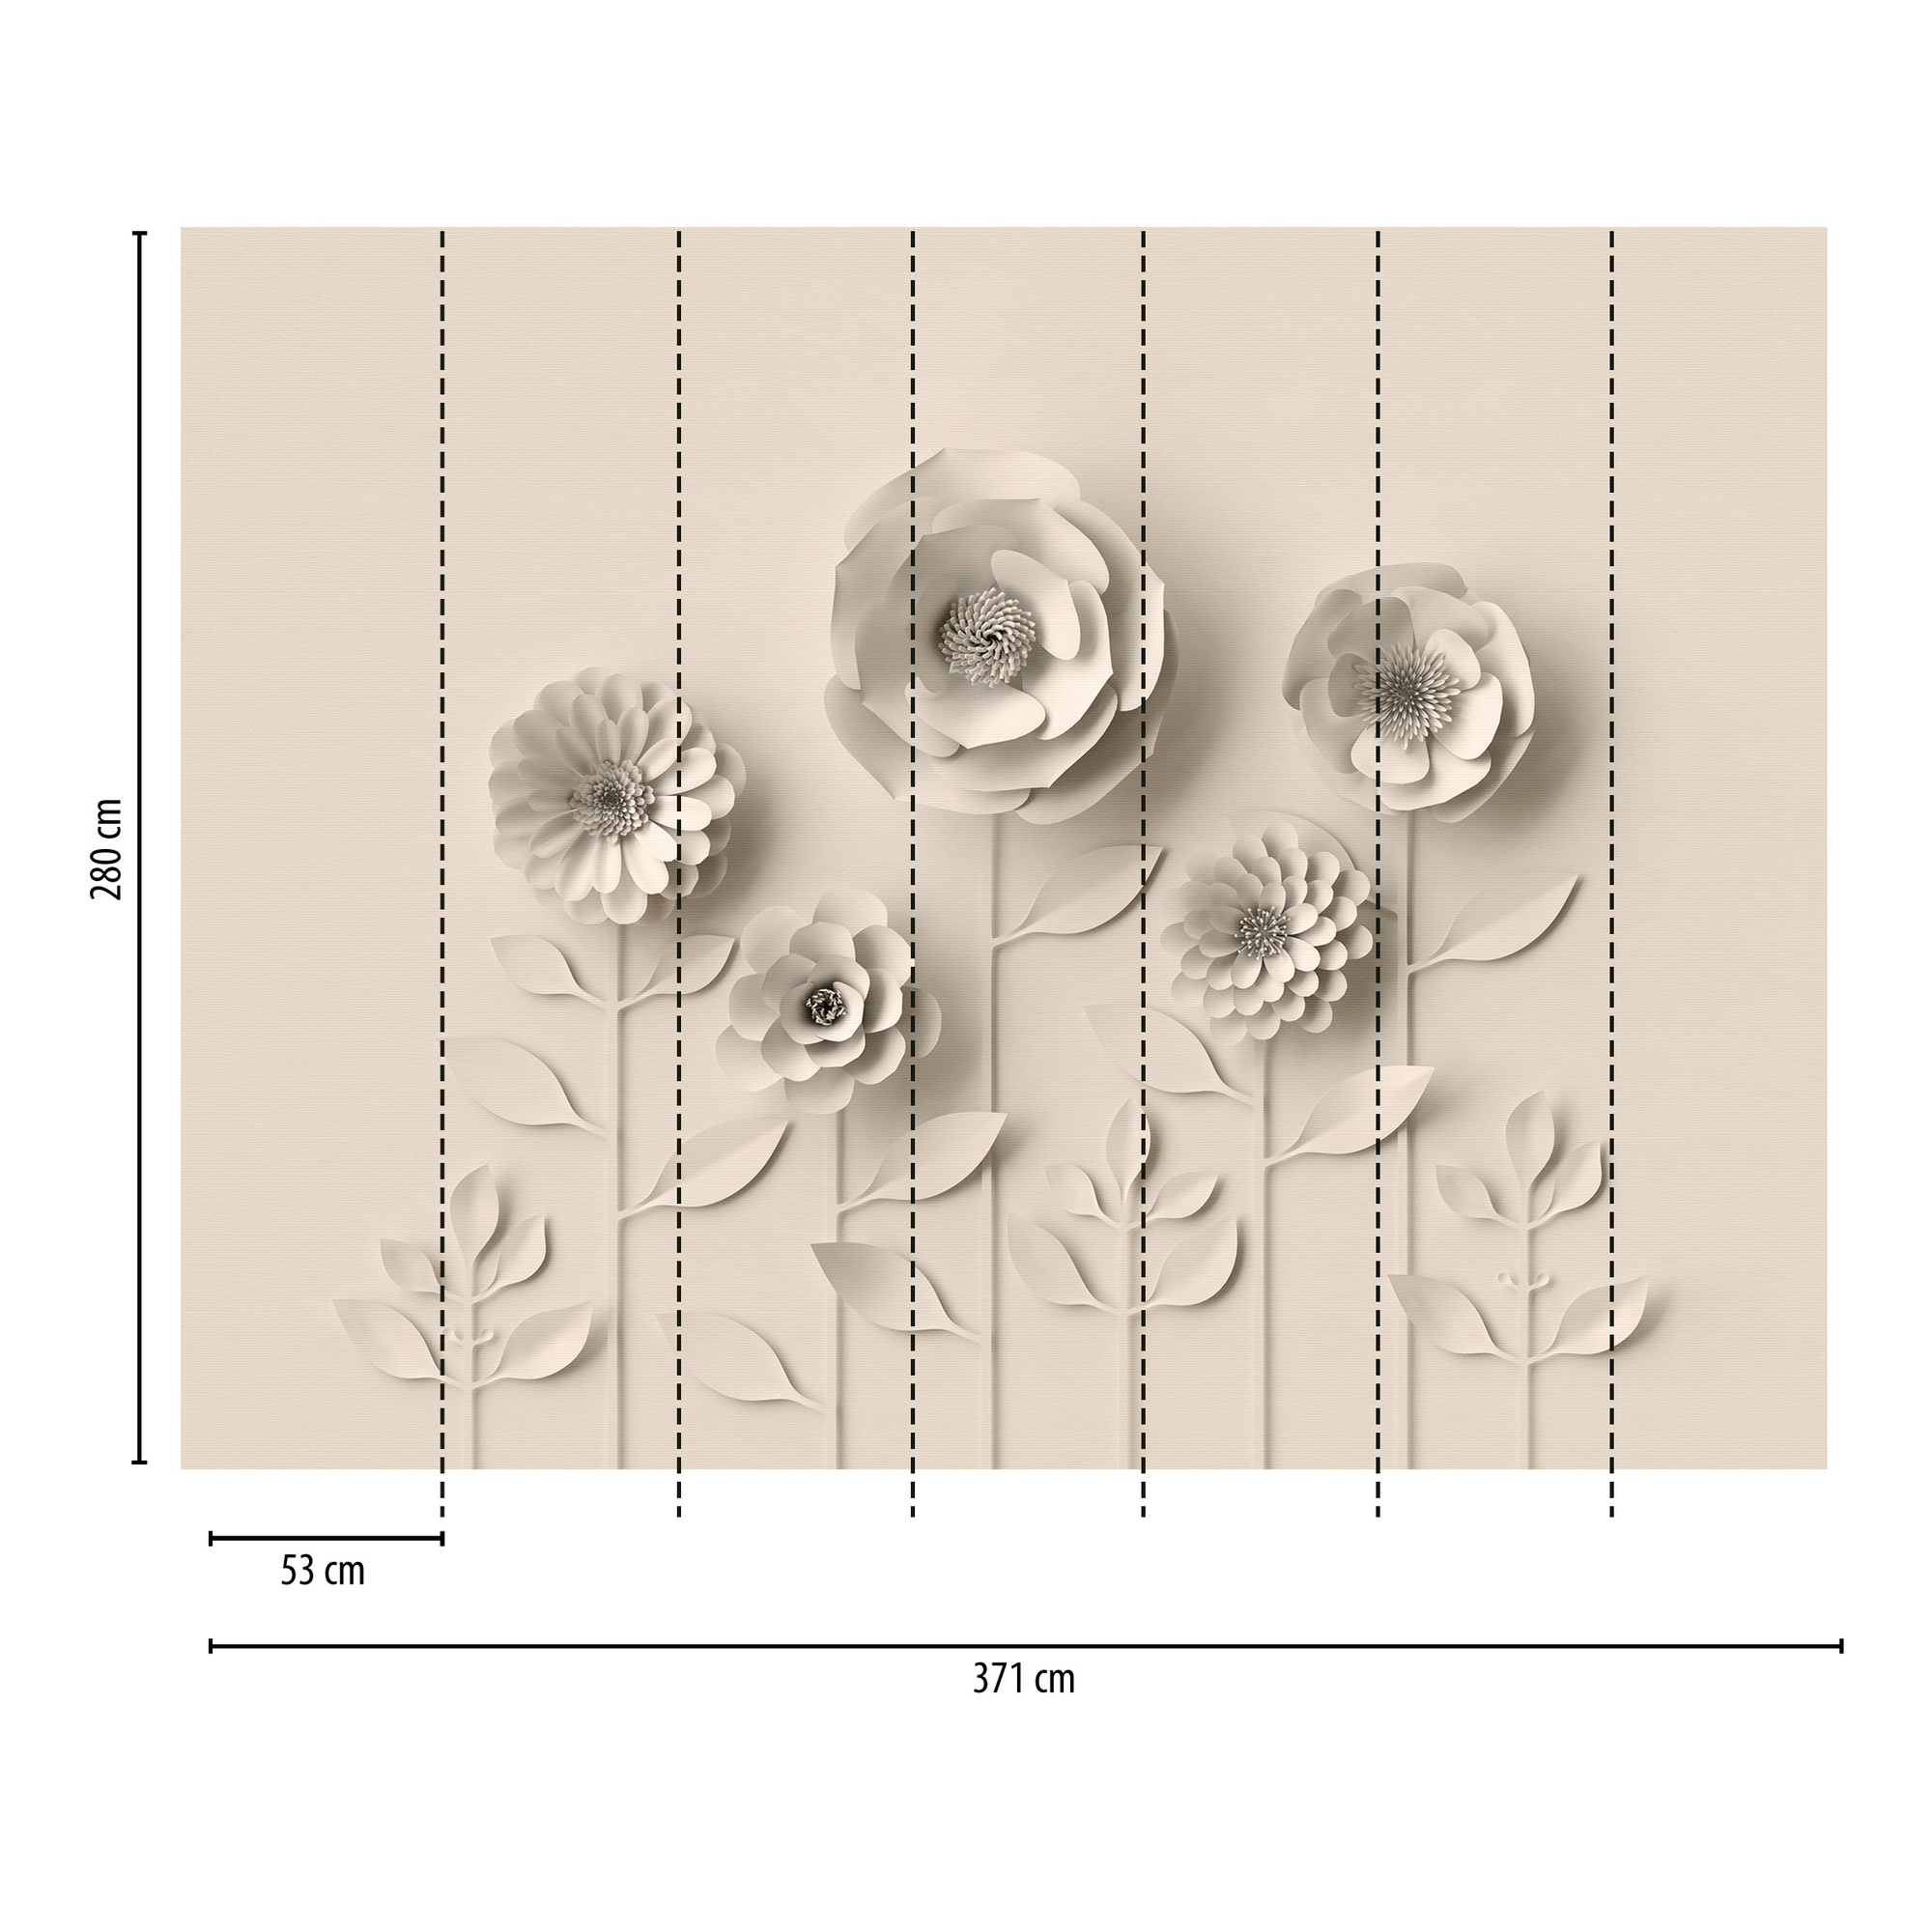 Vliestapete 'The Wall' Papierblumen 7er-Panel beige/weiß 371 x 280 cm + product picture